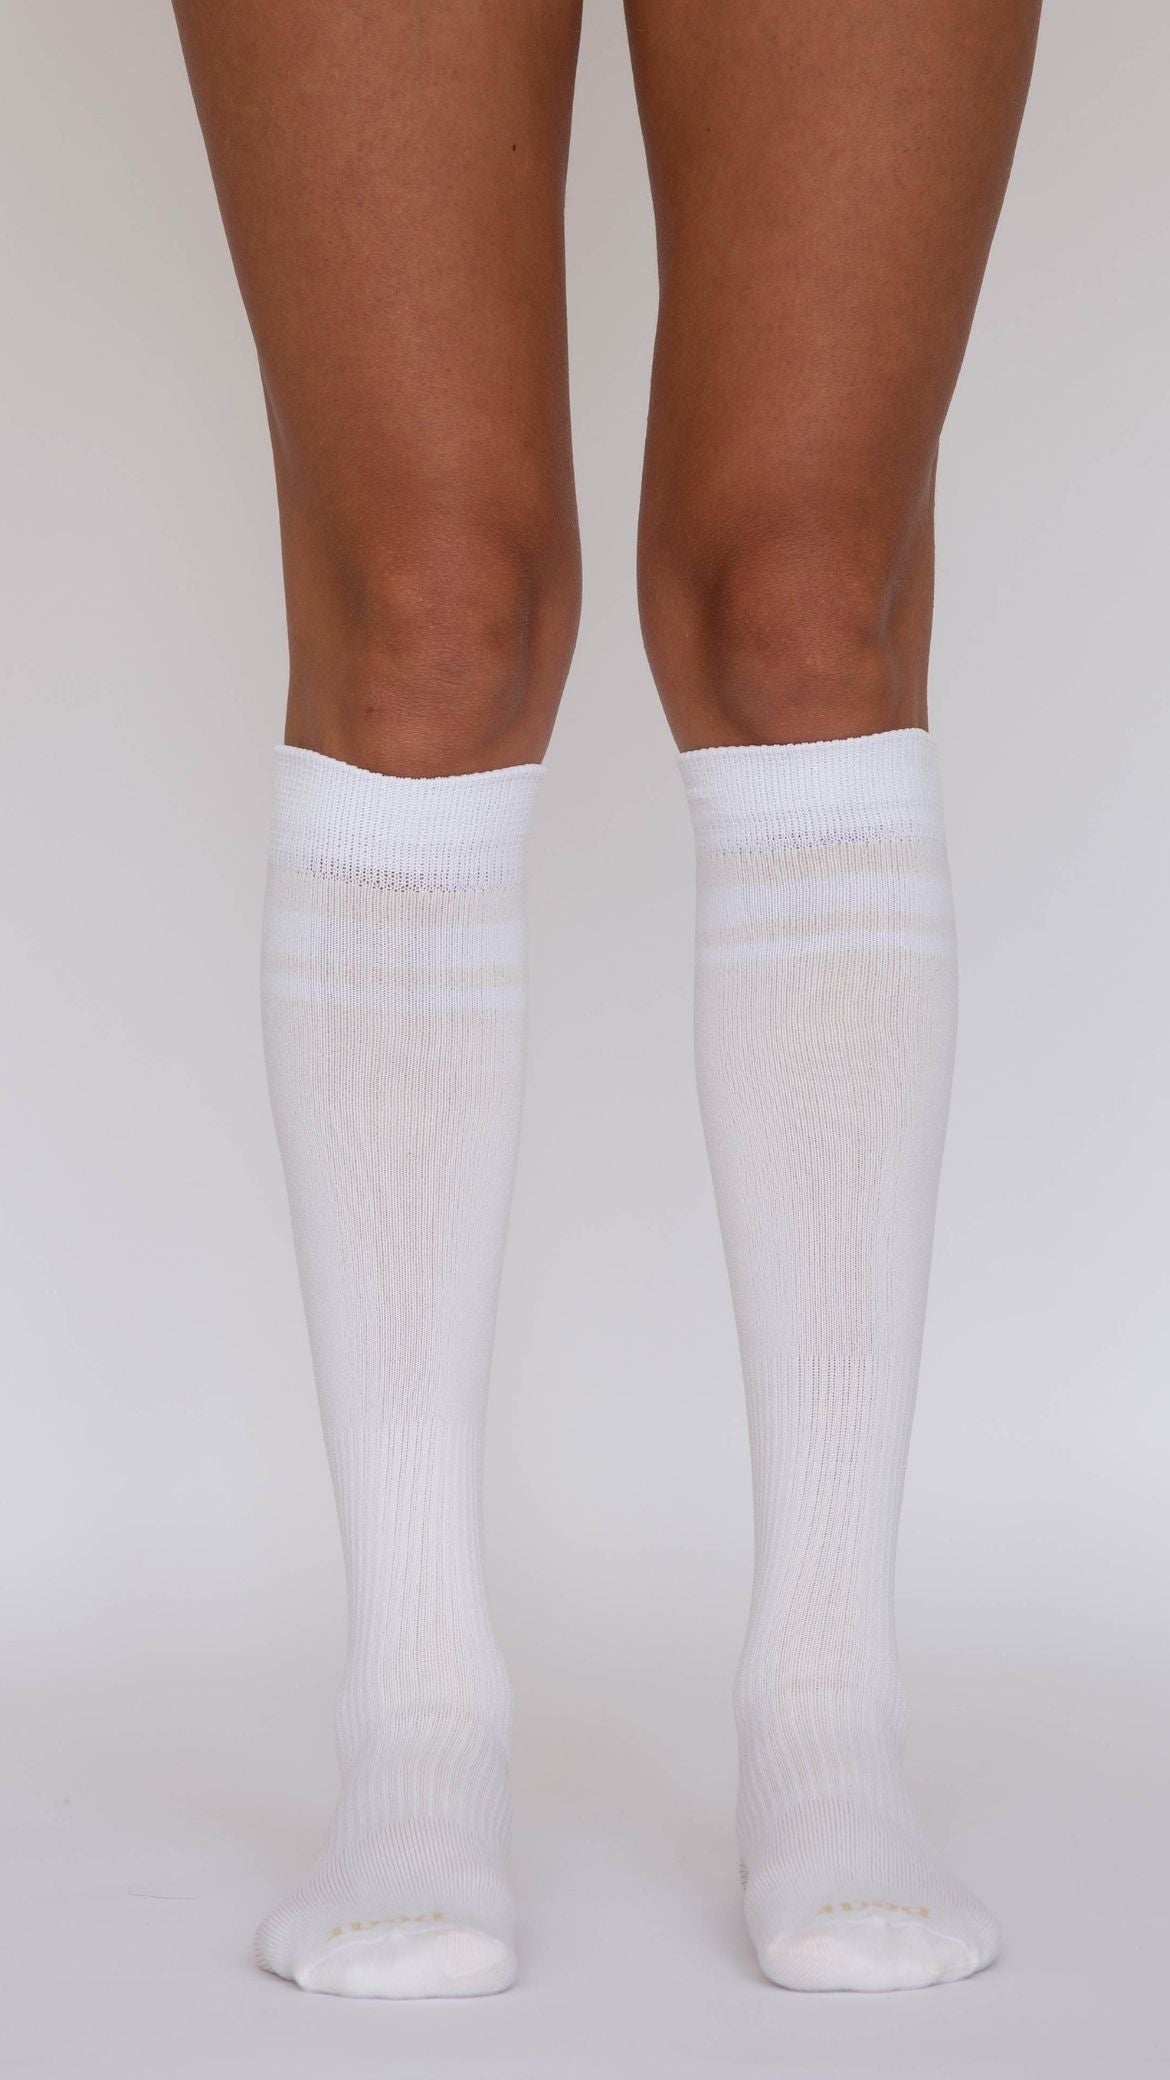 Plaaee Compression Socks for Women Men Cute Wild Safari African Giraffe  Compression Socks for Sports Nurses Athletic Stocking